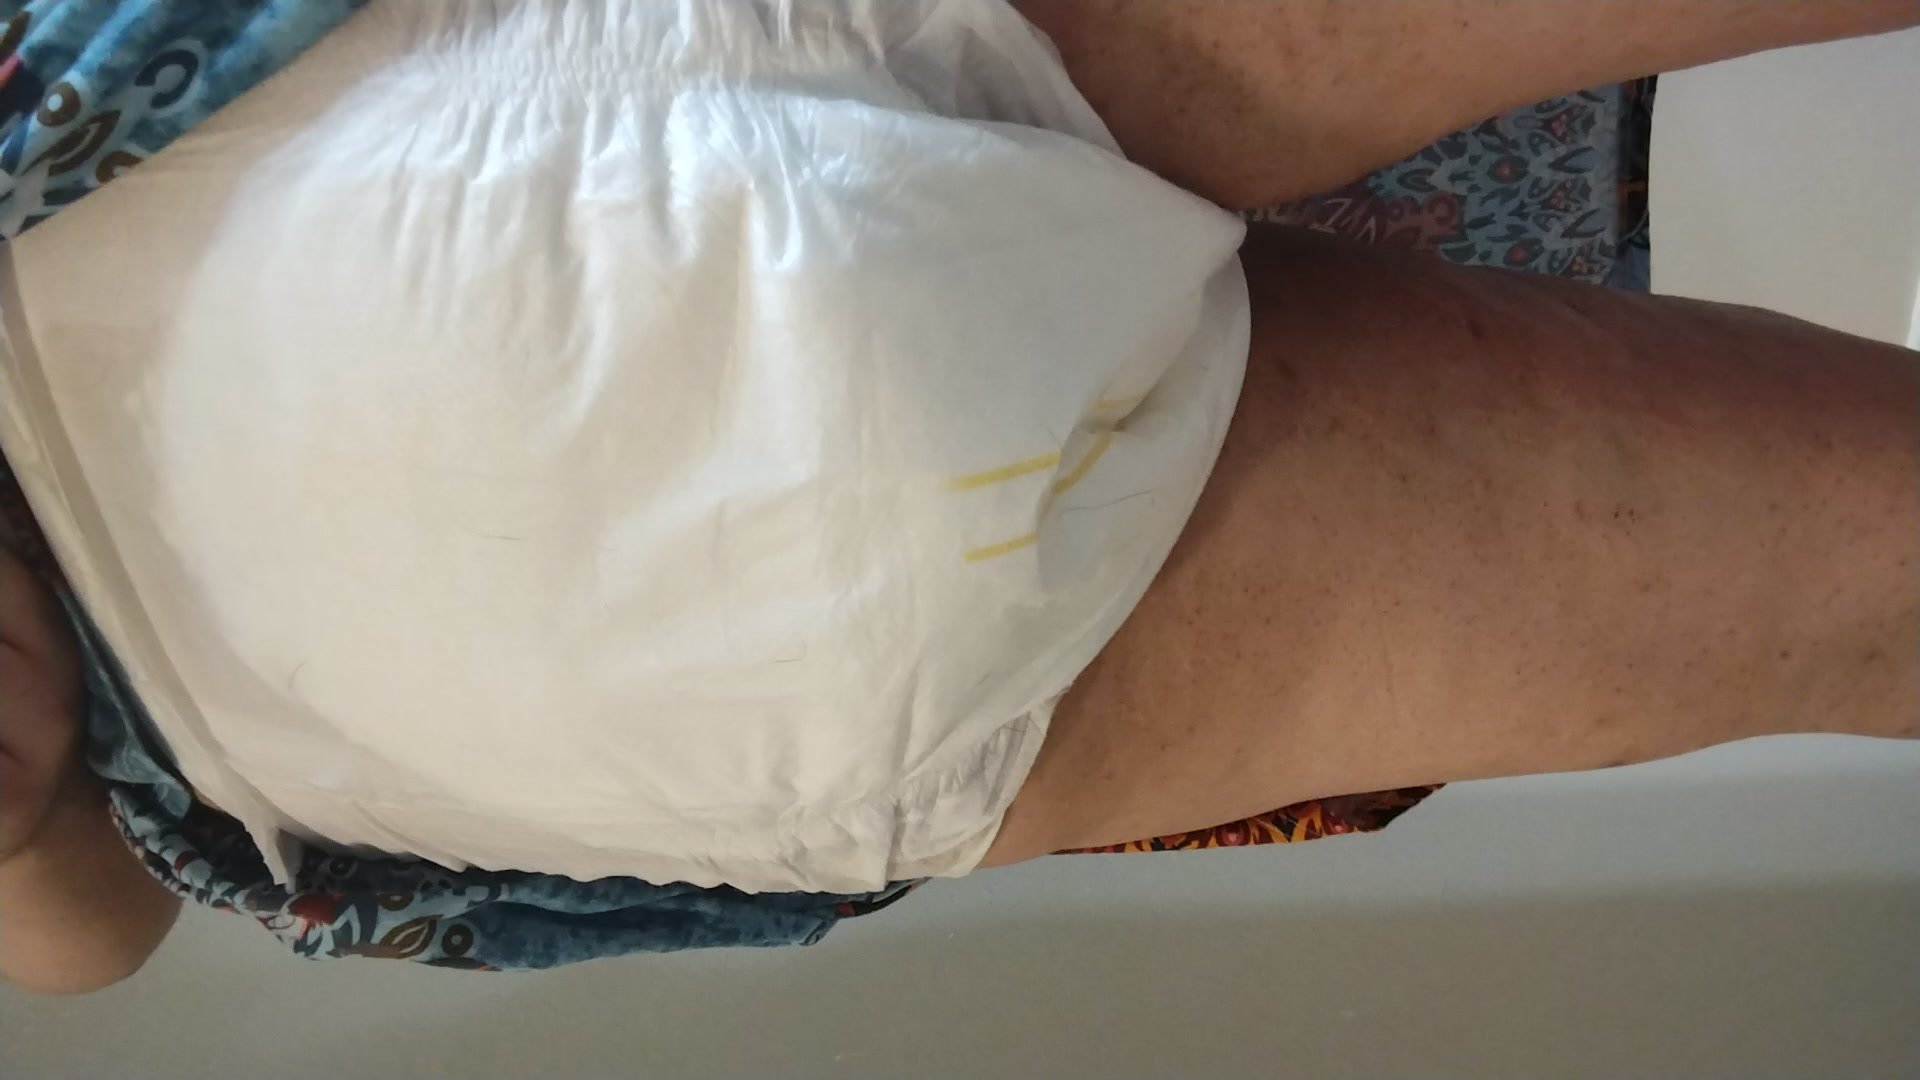 shitting my diaper in my dress